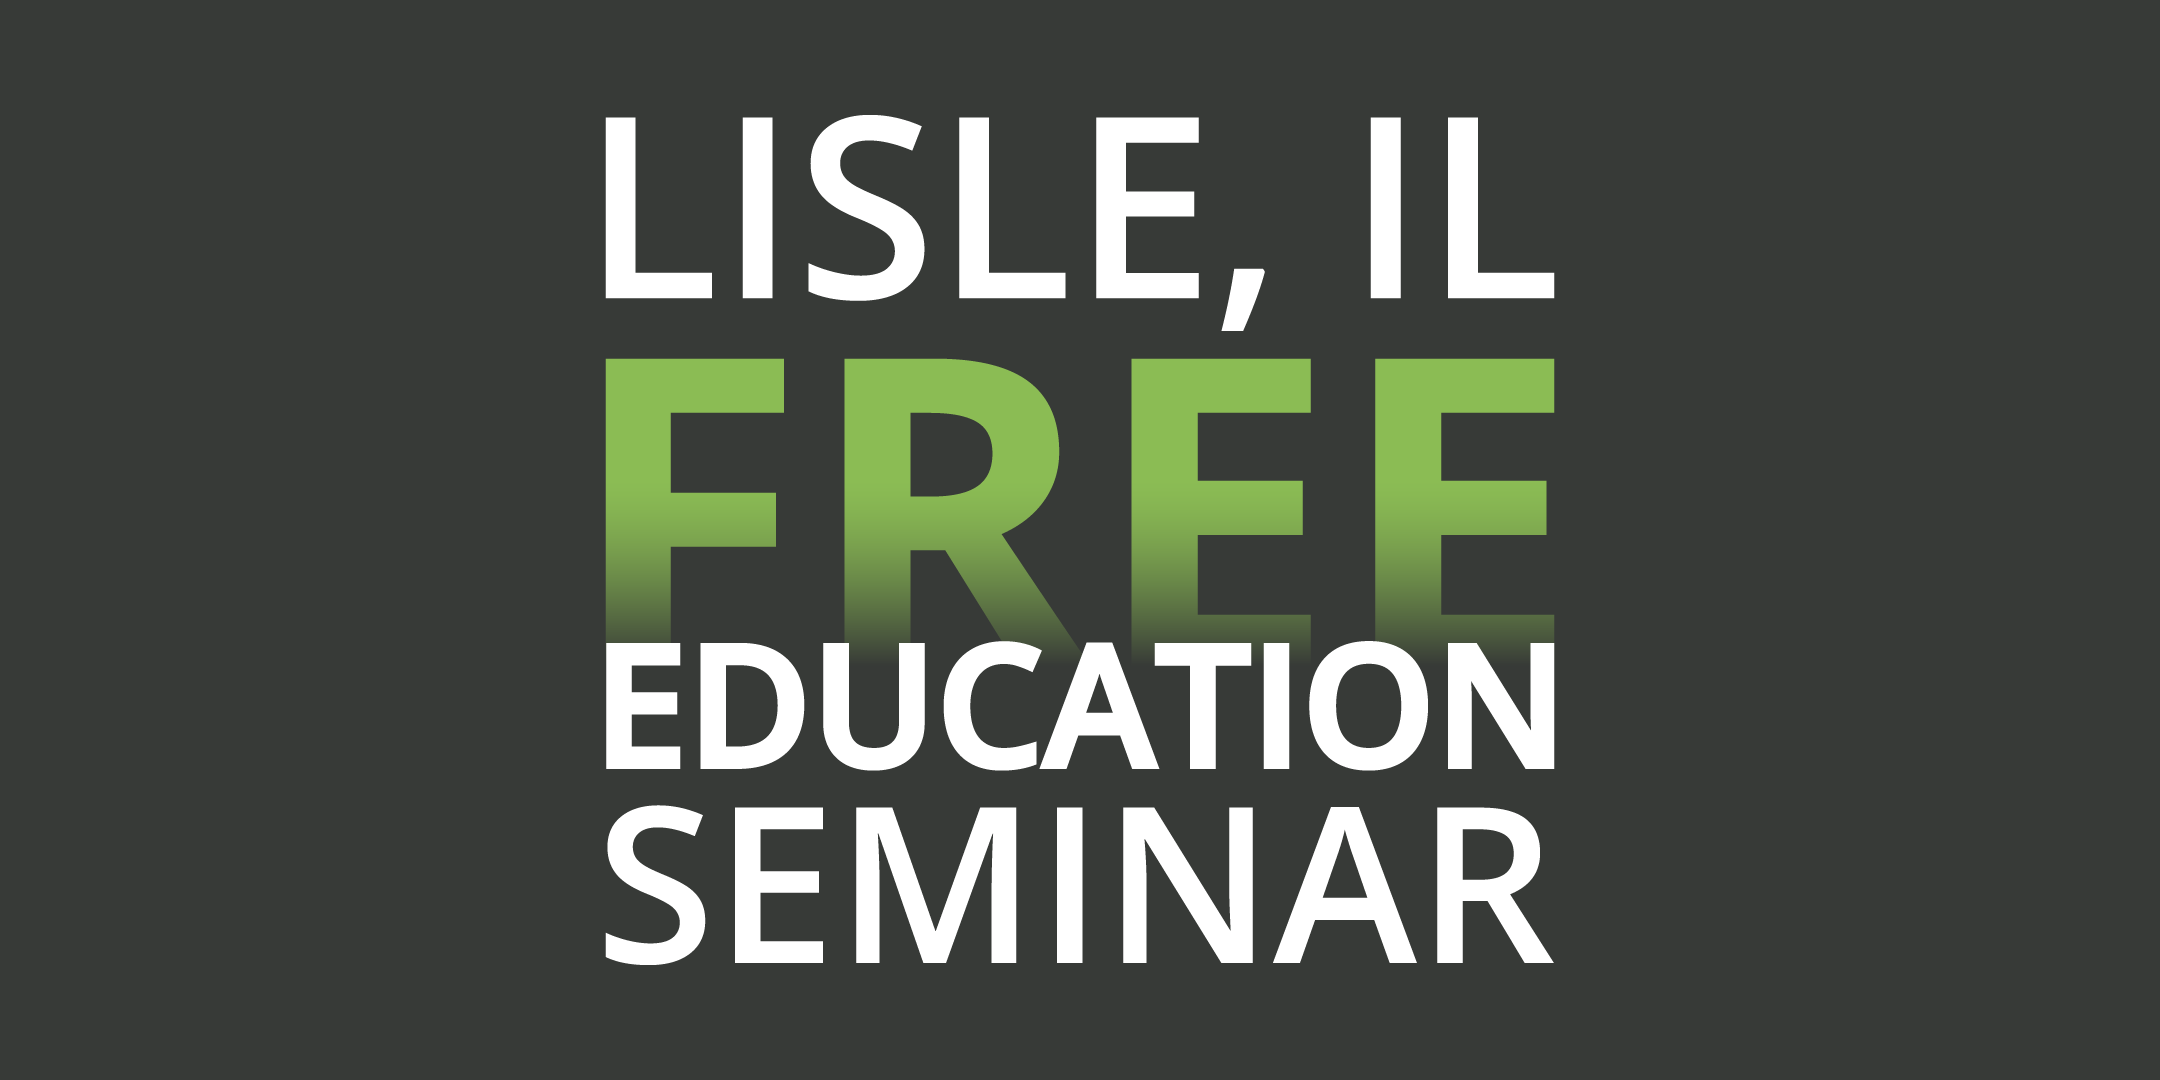 Lisle Education Seminar